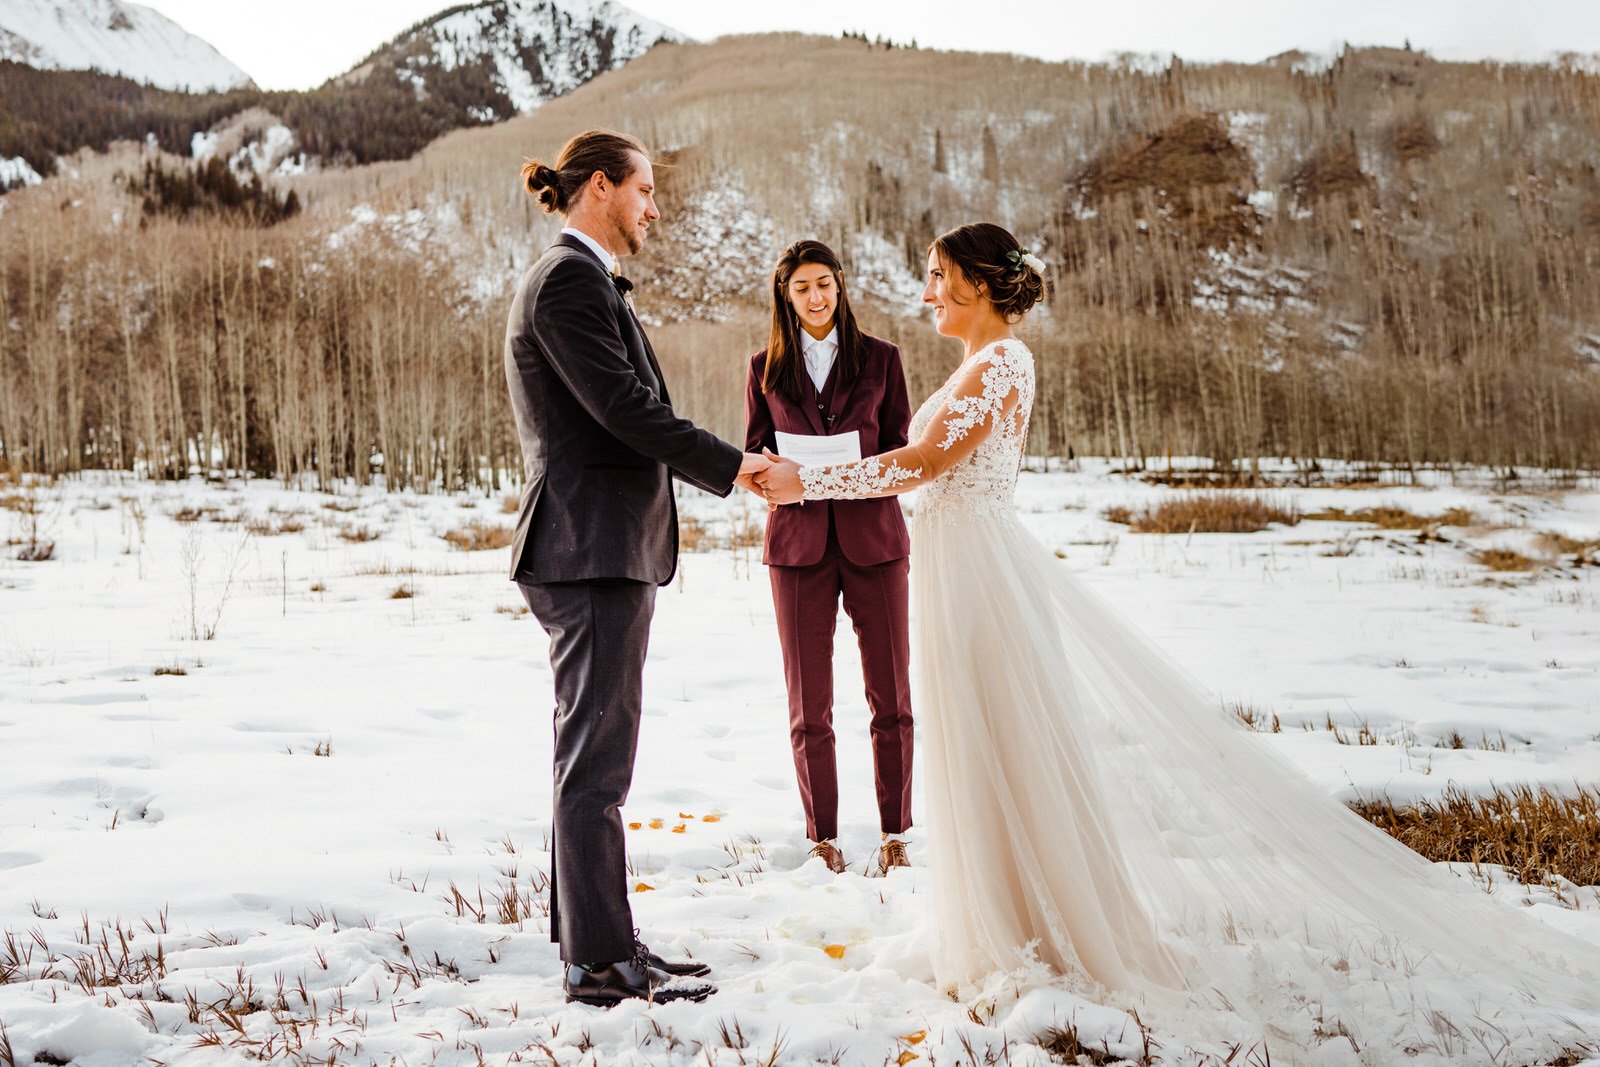 Colorado Elopement Ceremony | Aspen, CO elopement photos + information from adventurous wedding photographer Kept Record | keptrecord.com